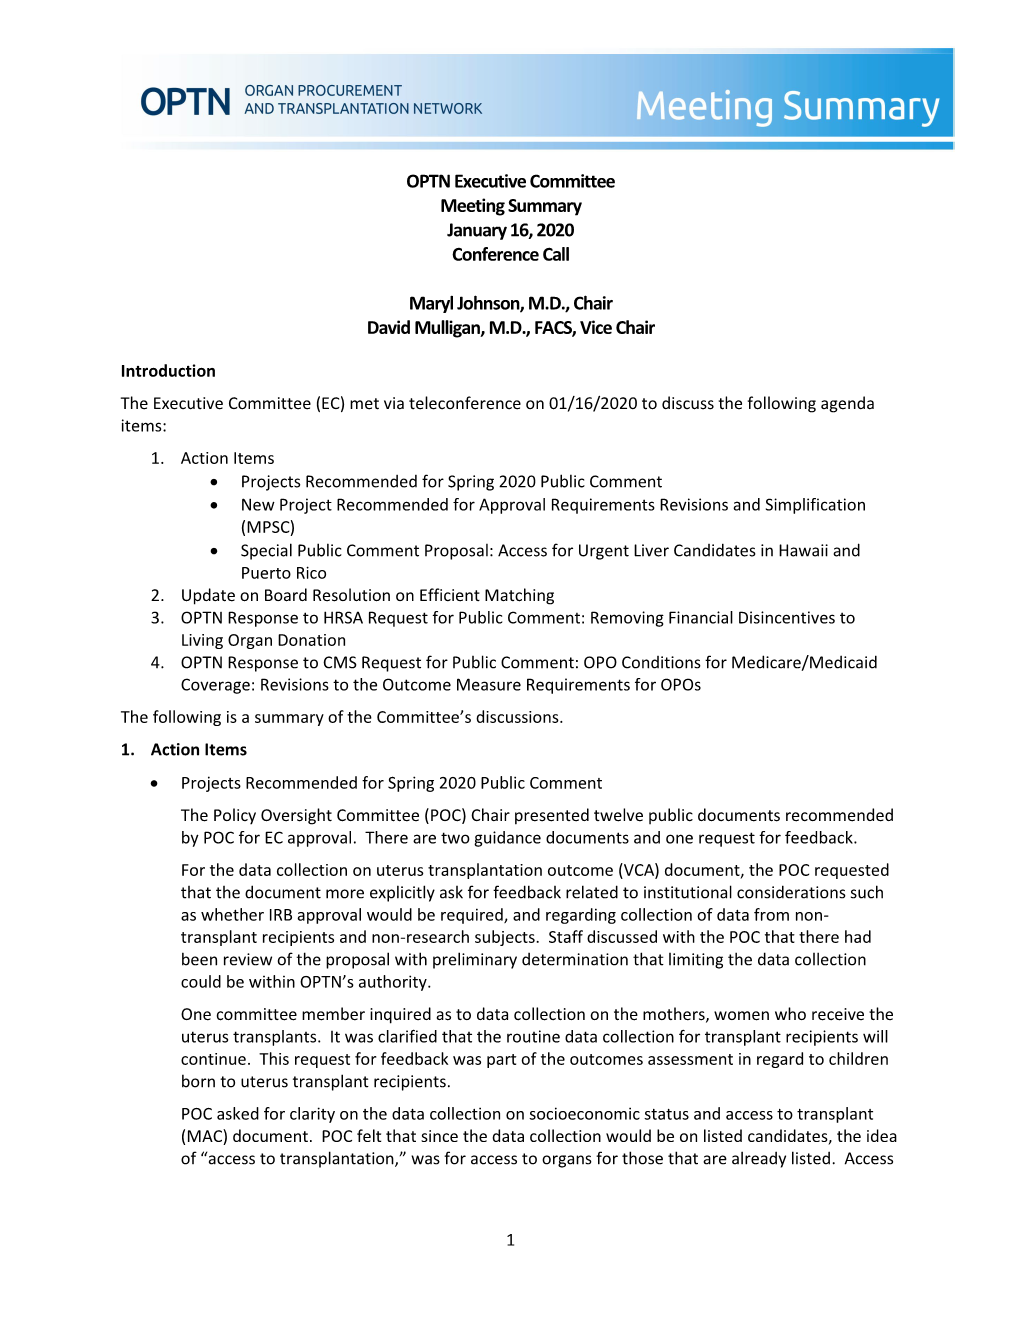 OPTN Executive Committee Meeting Summary 1.16.2020